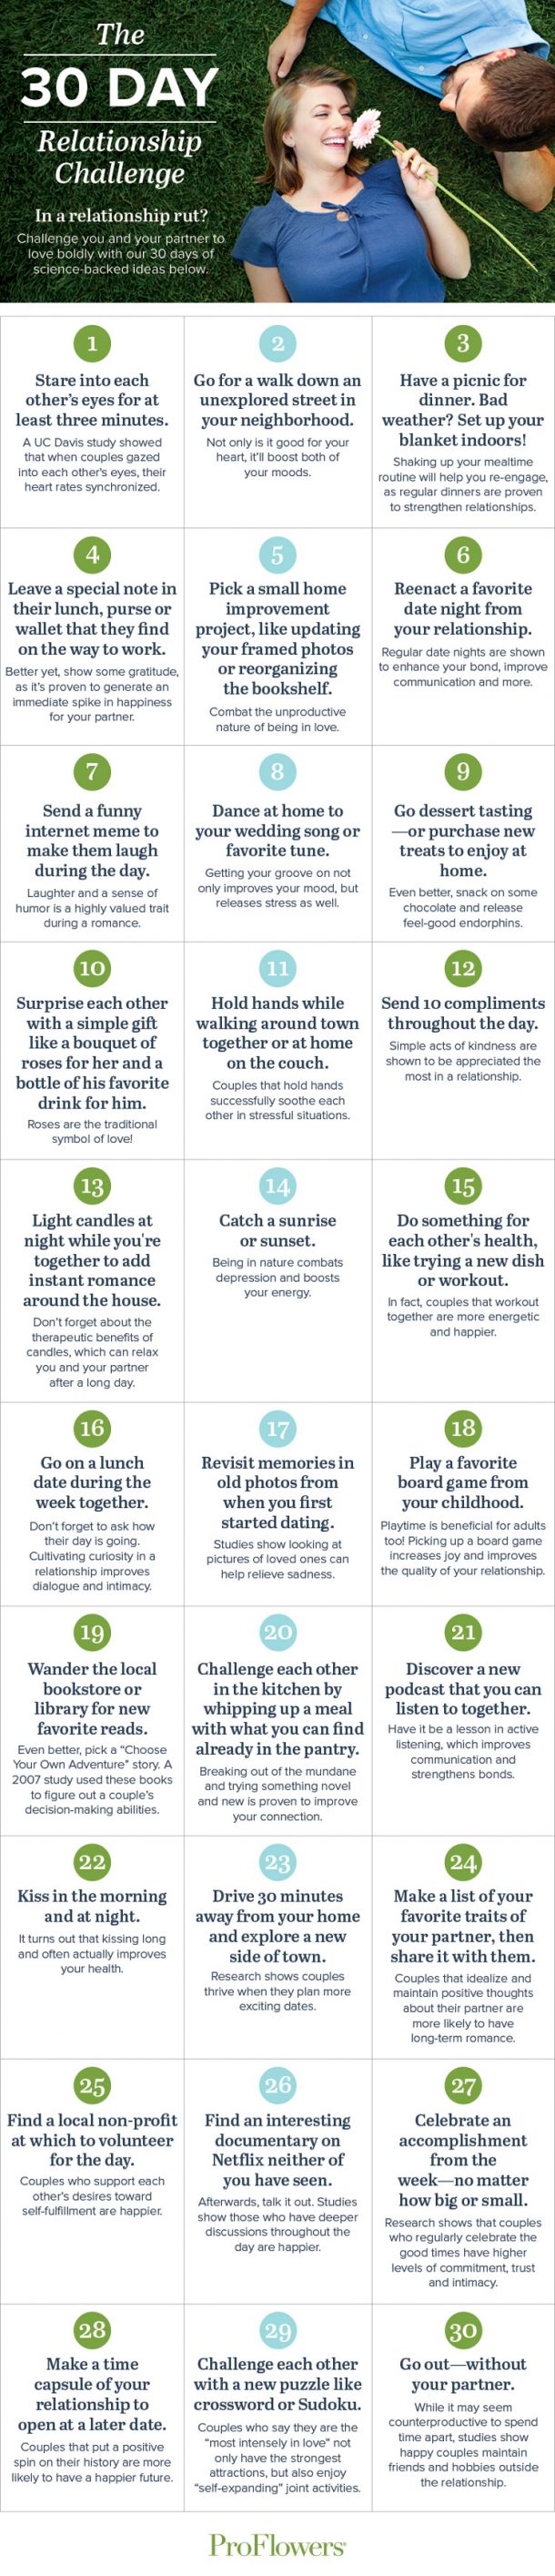 30 Day relationship challenge